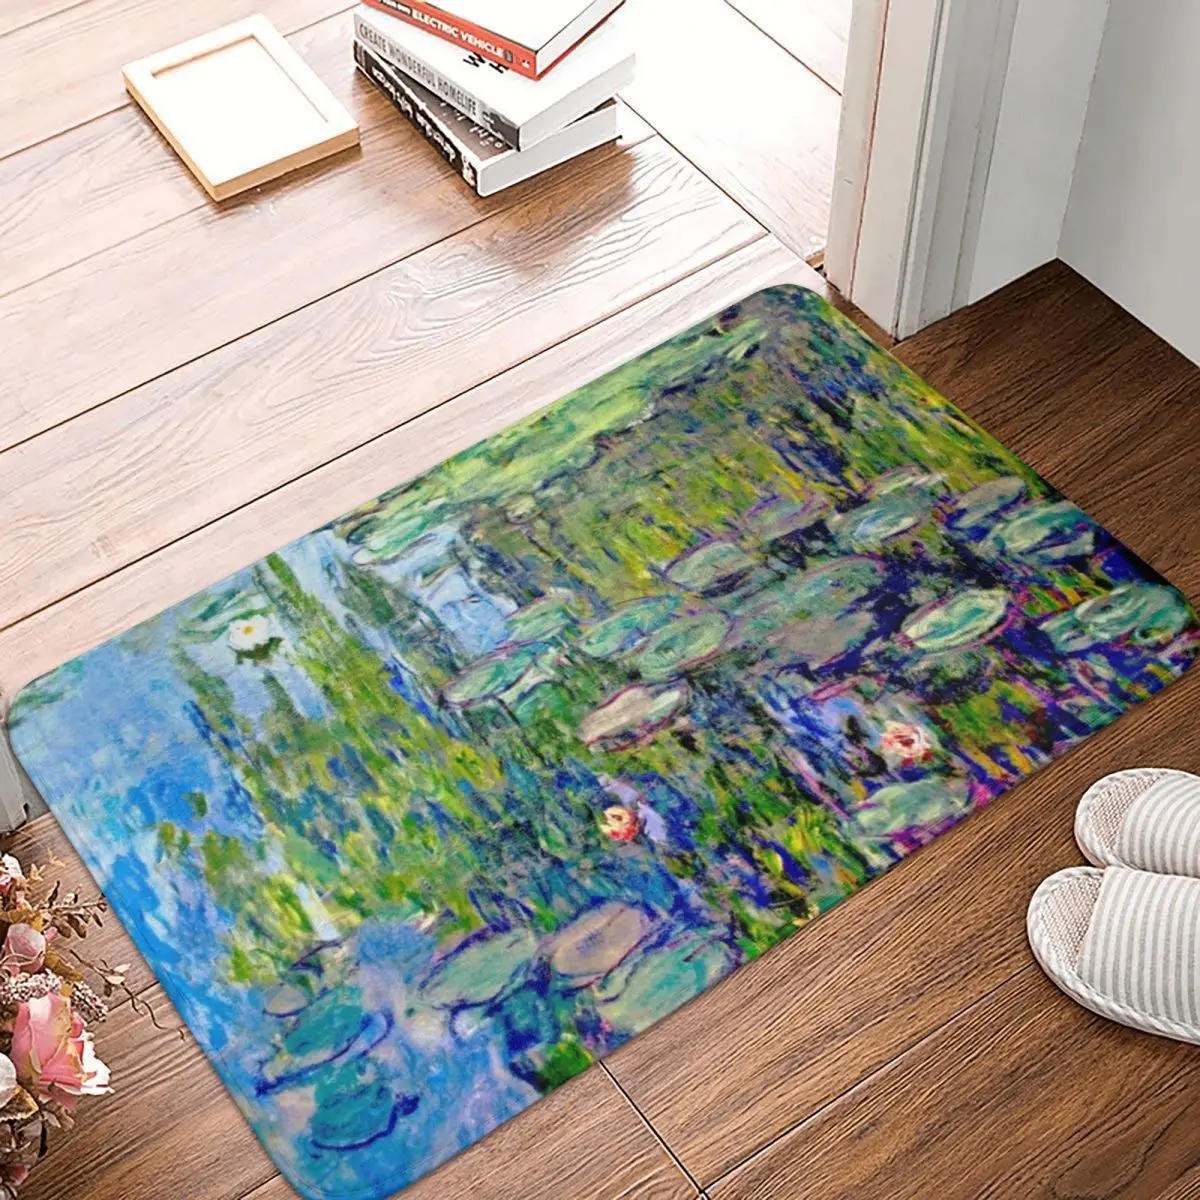 

Claude Monet Blue Water Lilies Doormat Carpet Mat Rug Polyester Non-Slip Floor Decor Bath Bathroom Kitchen Living Room 40x60